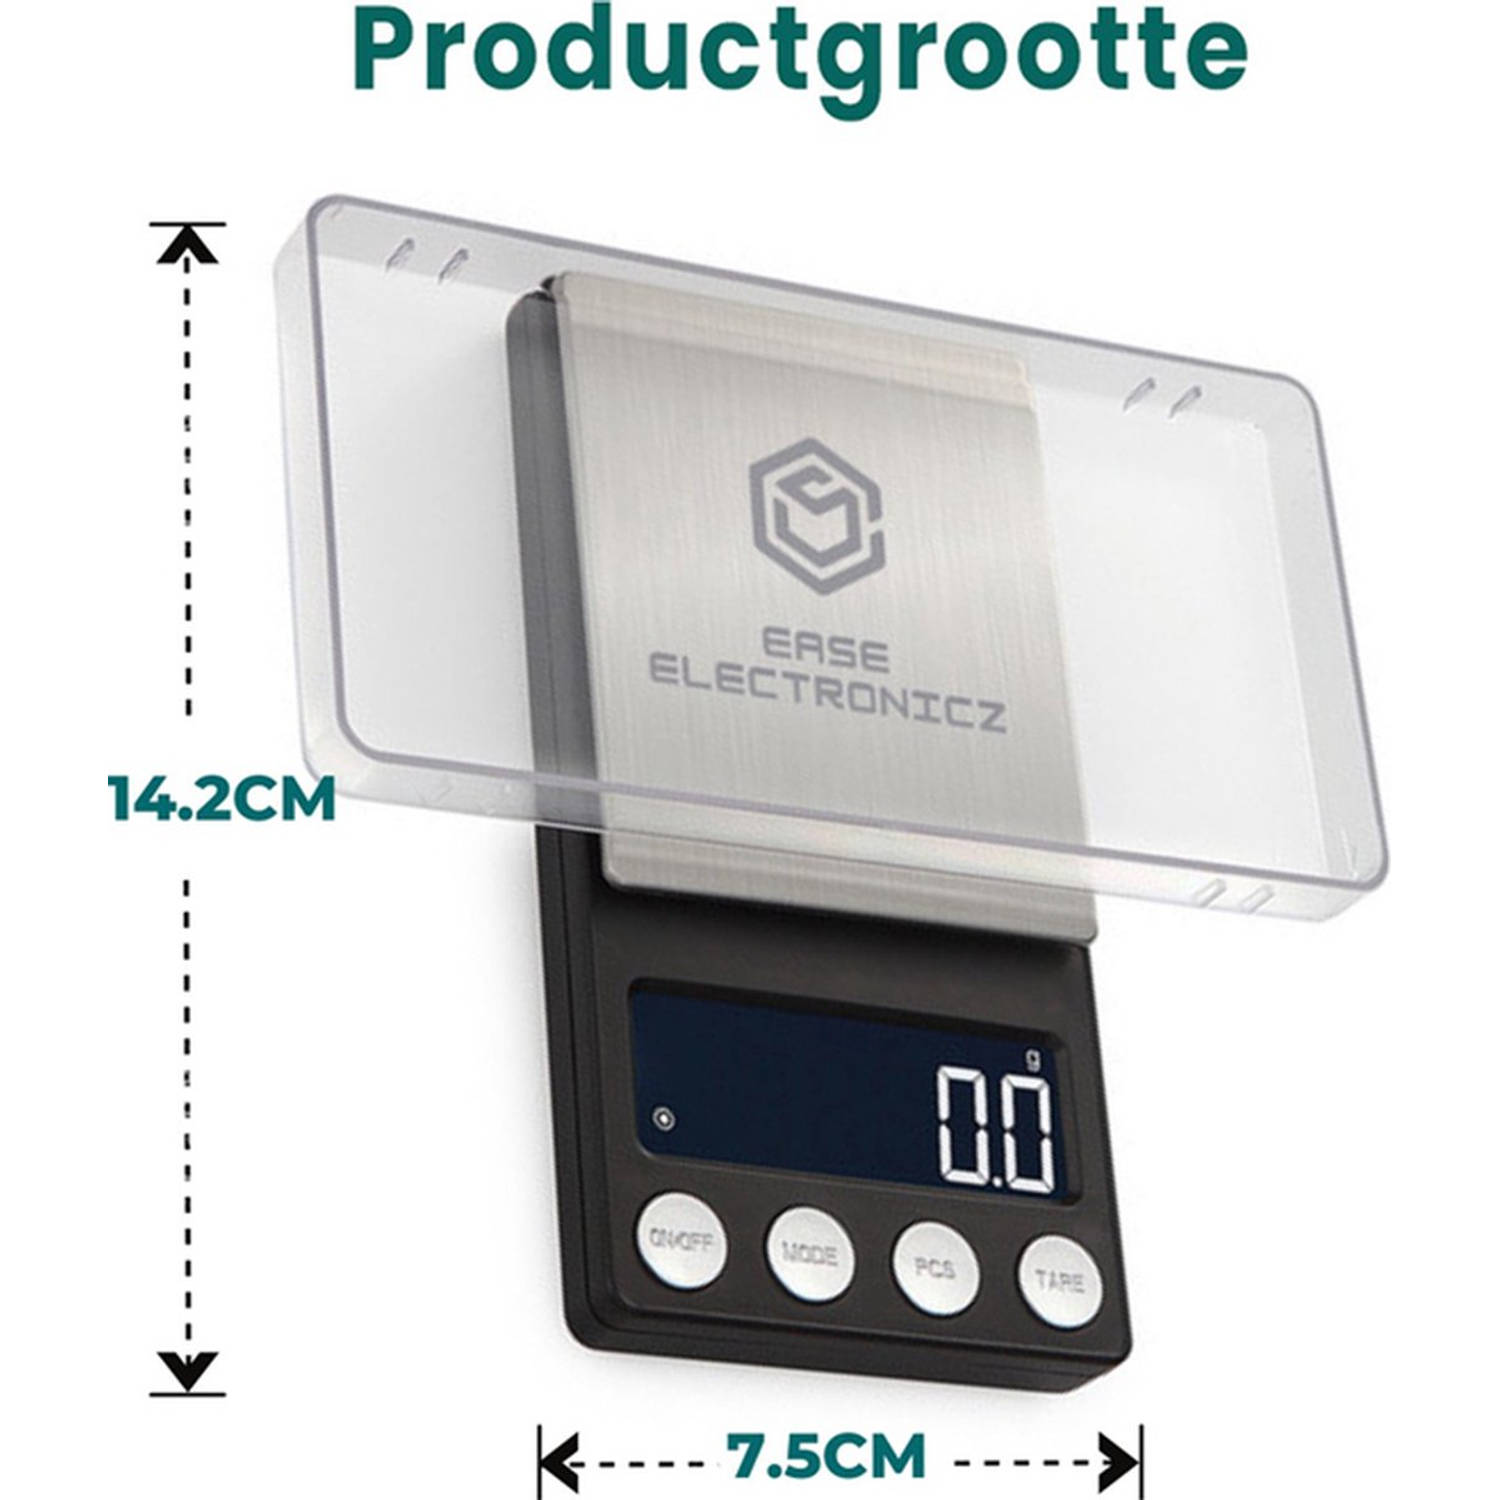 mannetje gastheer vriendelijk Ease Electronicz digitale mini precisie keukenweegschaal - 0,01 tot 200 gram  - 14.2 x 7.5 cm - pocket scale op batterij | Blokker